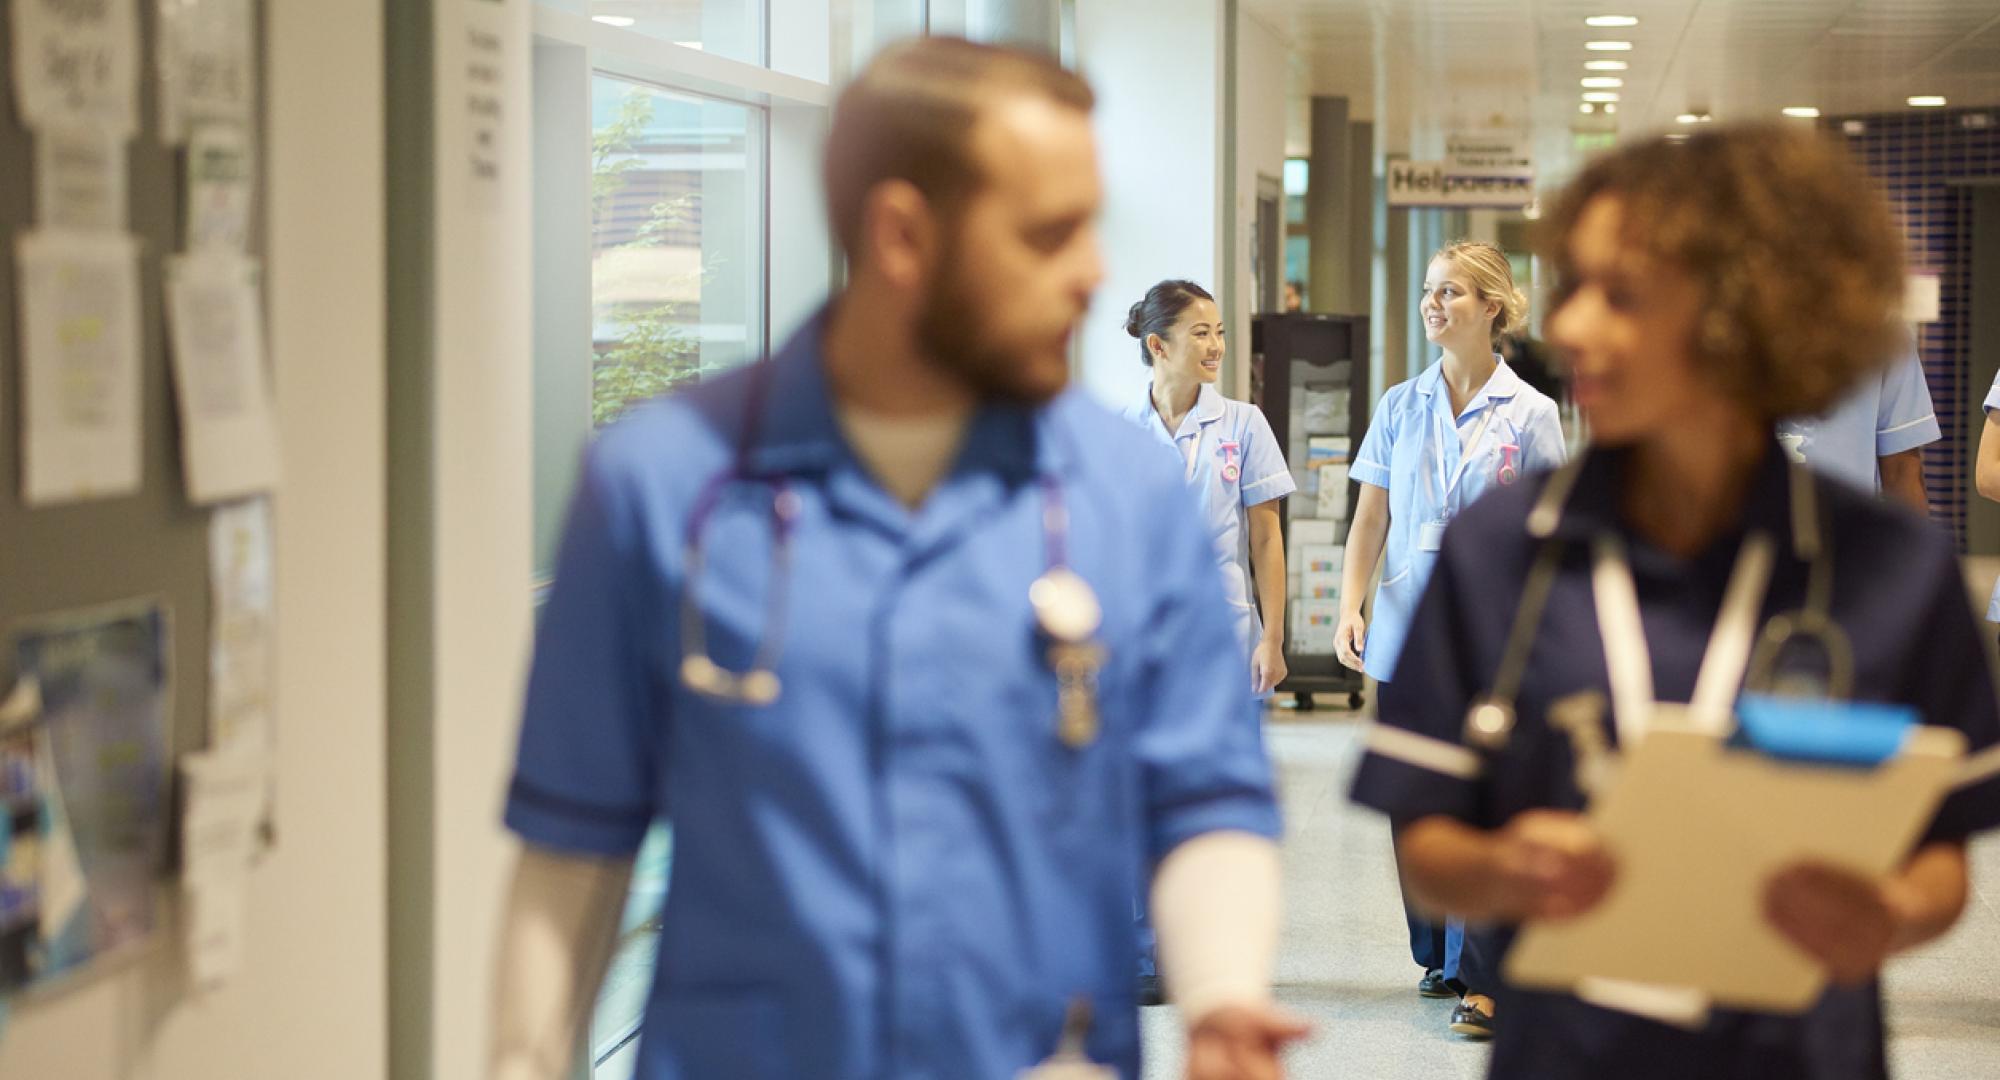 NHS nurses walking down a corridor